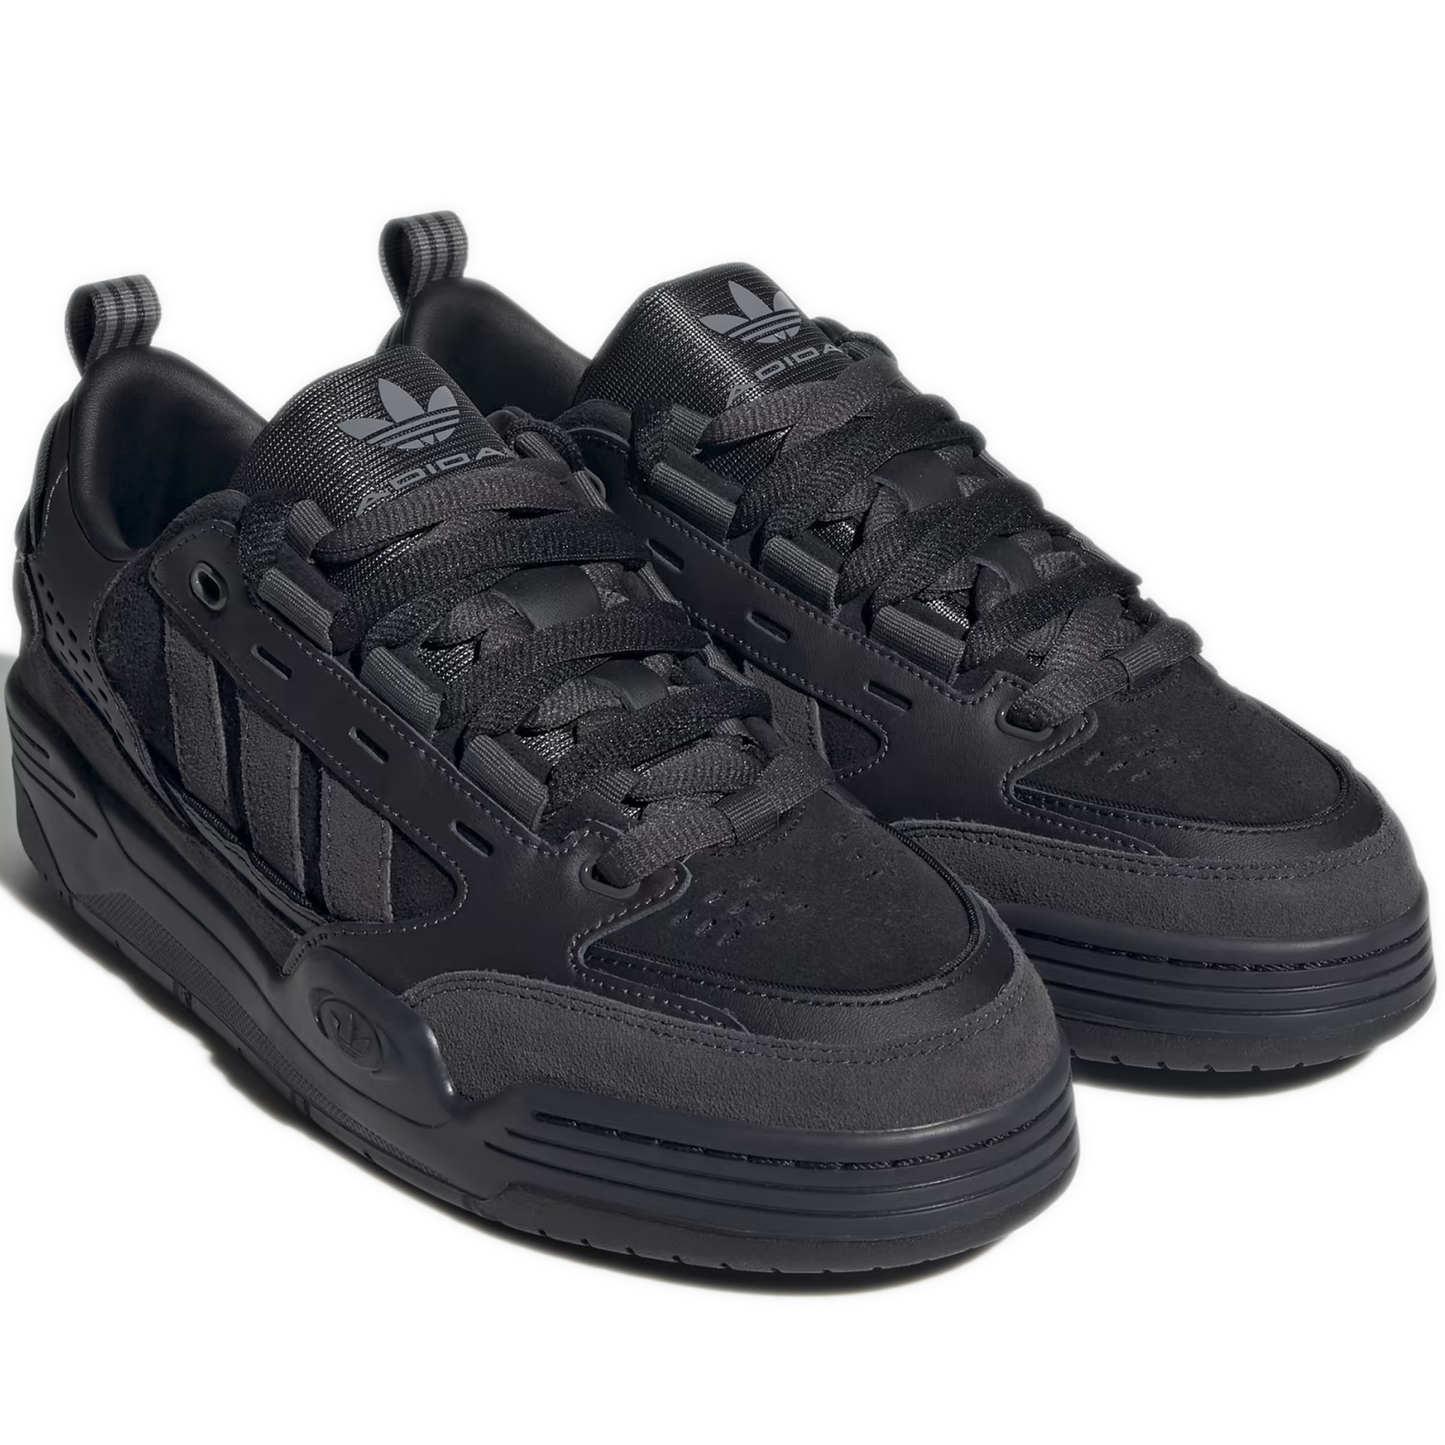 Men's Adidas ADI2000 Shoes - Black